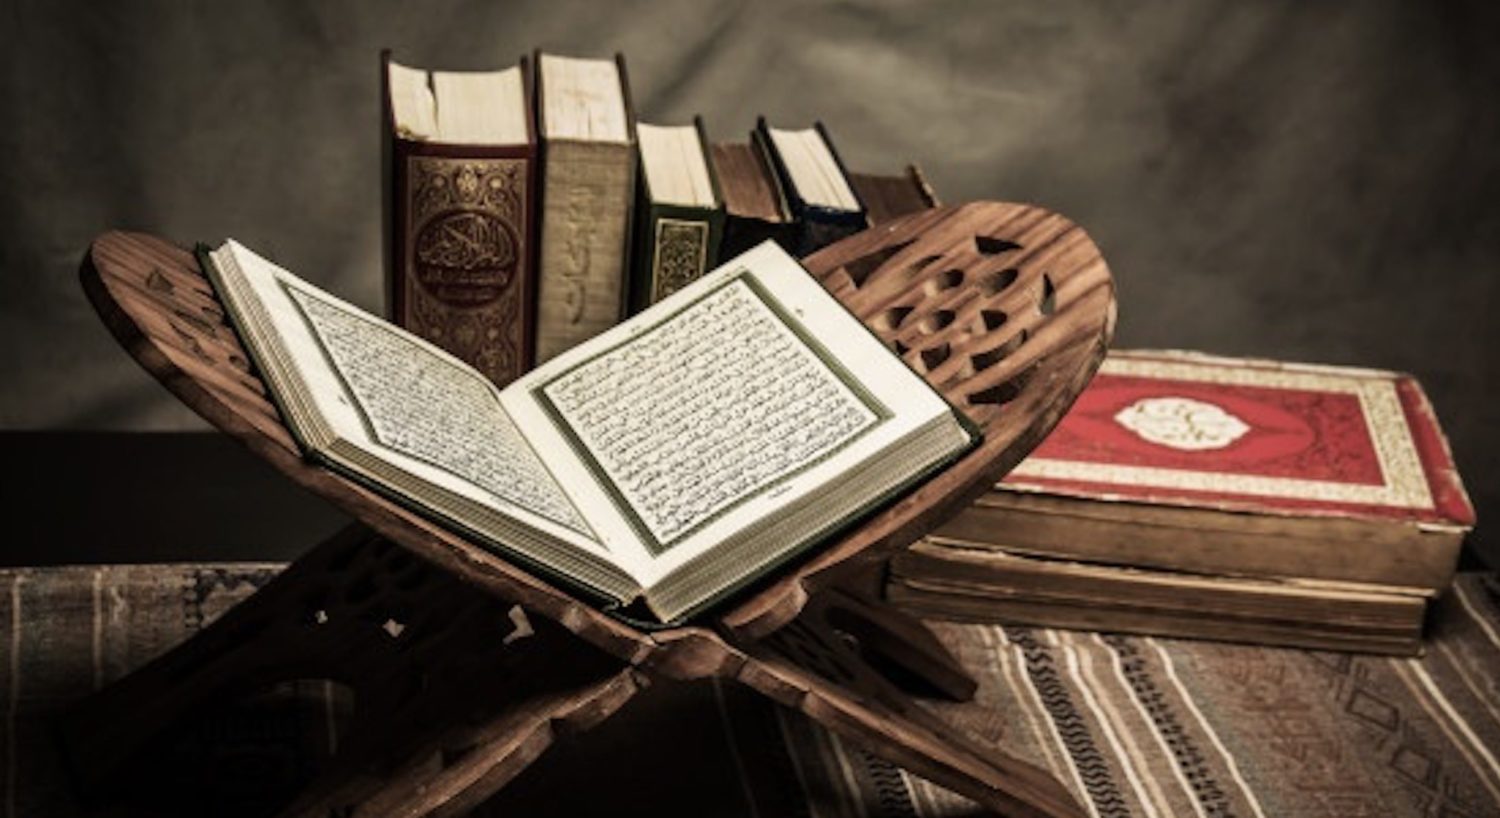 cropped-koran-holy-book-muslims-public-item-all-muslims-table_44074-502-1-e1571803112620.jpg